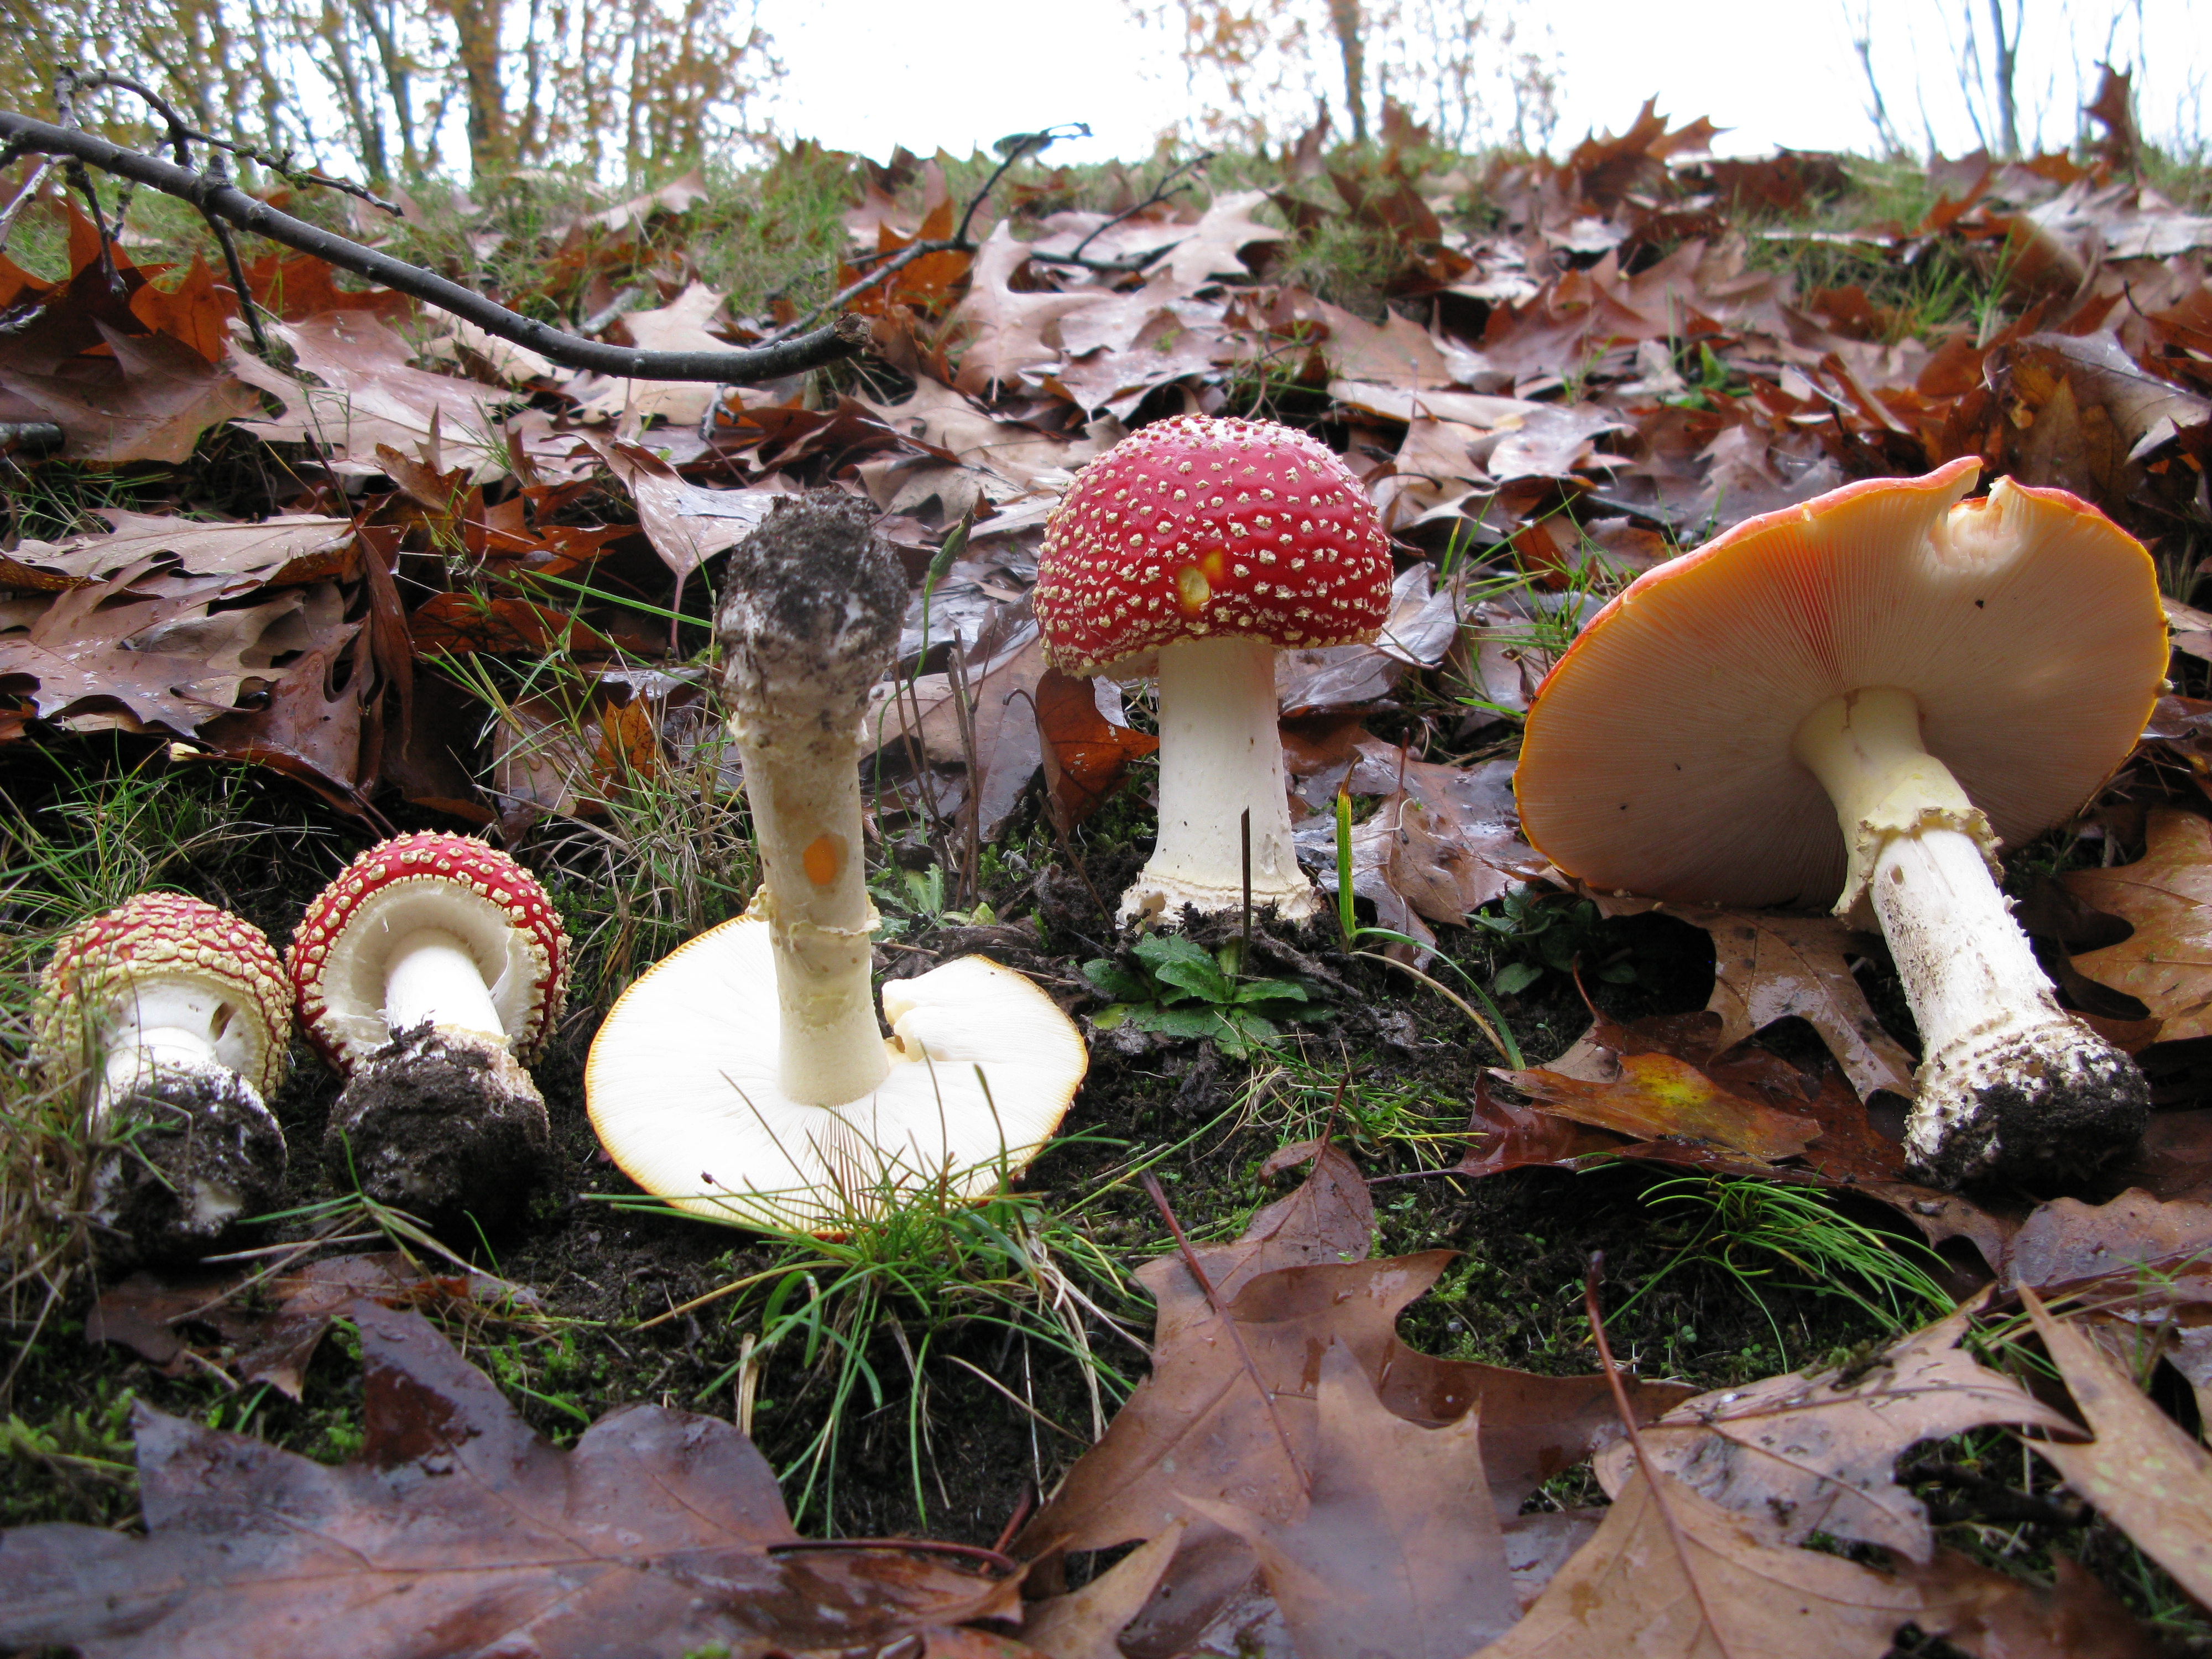 Lawnmower's mushroom